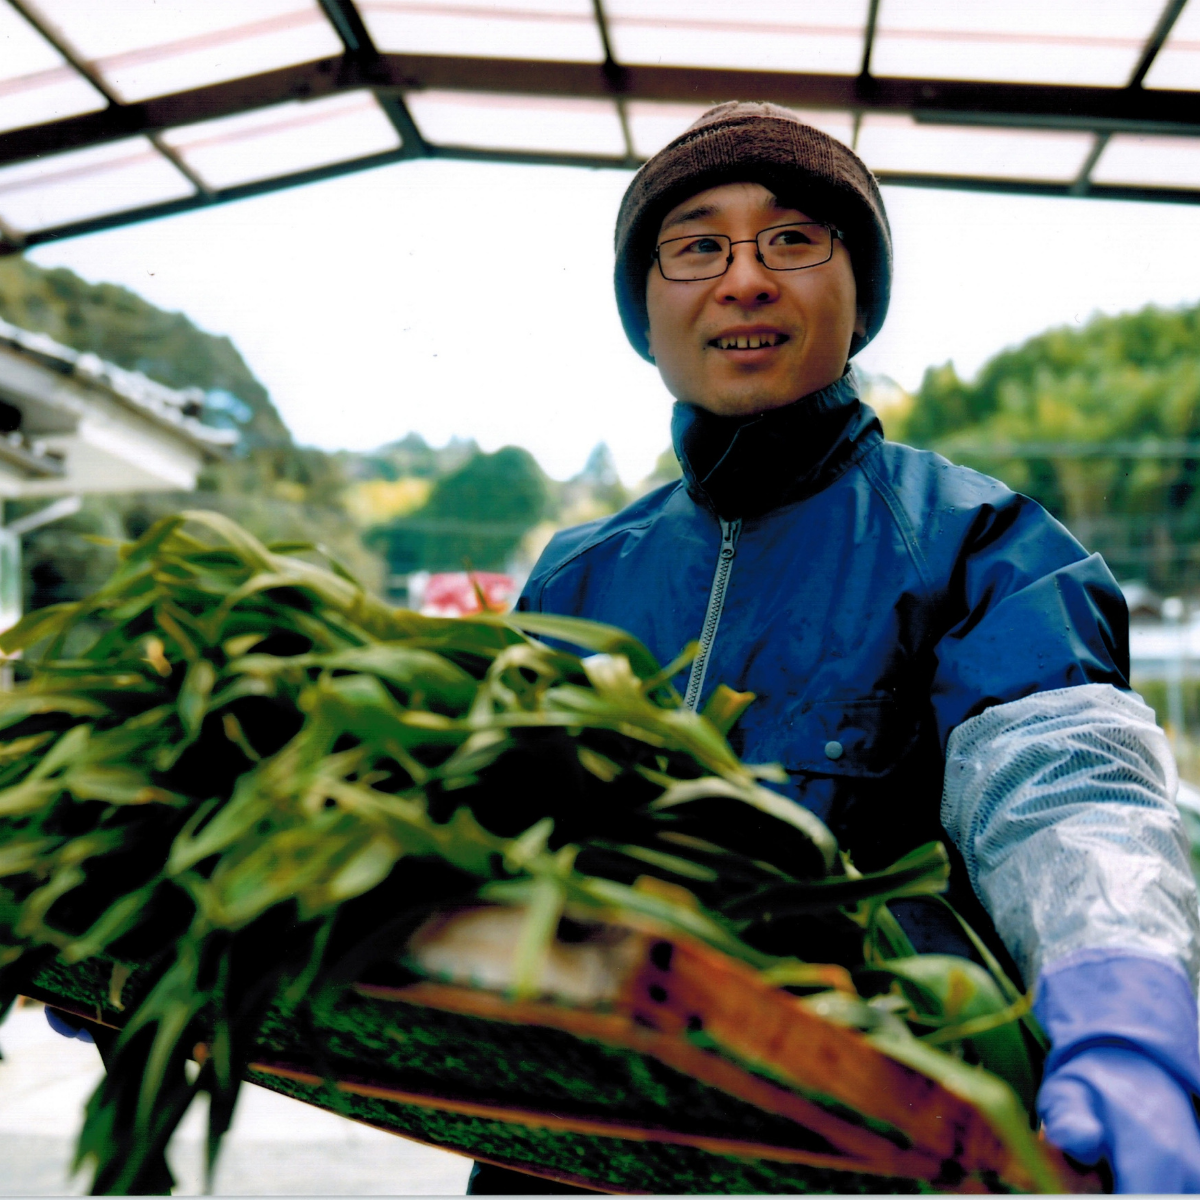 Man holding bunch of green garlic plants